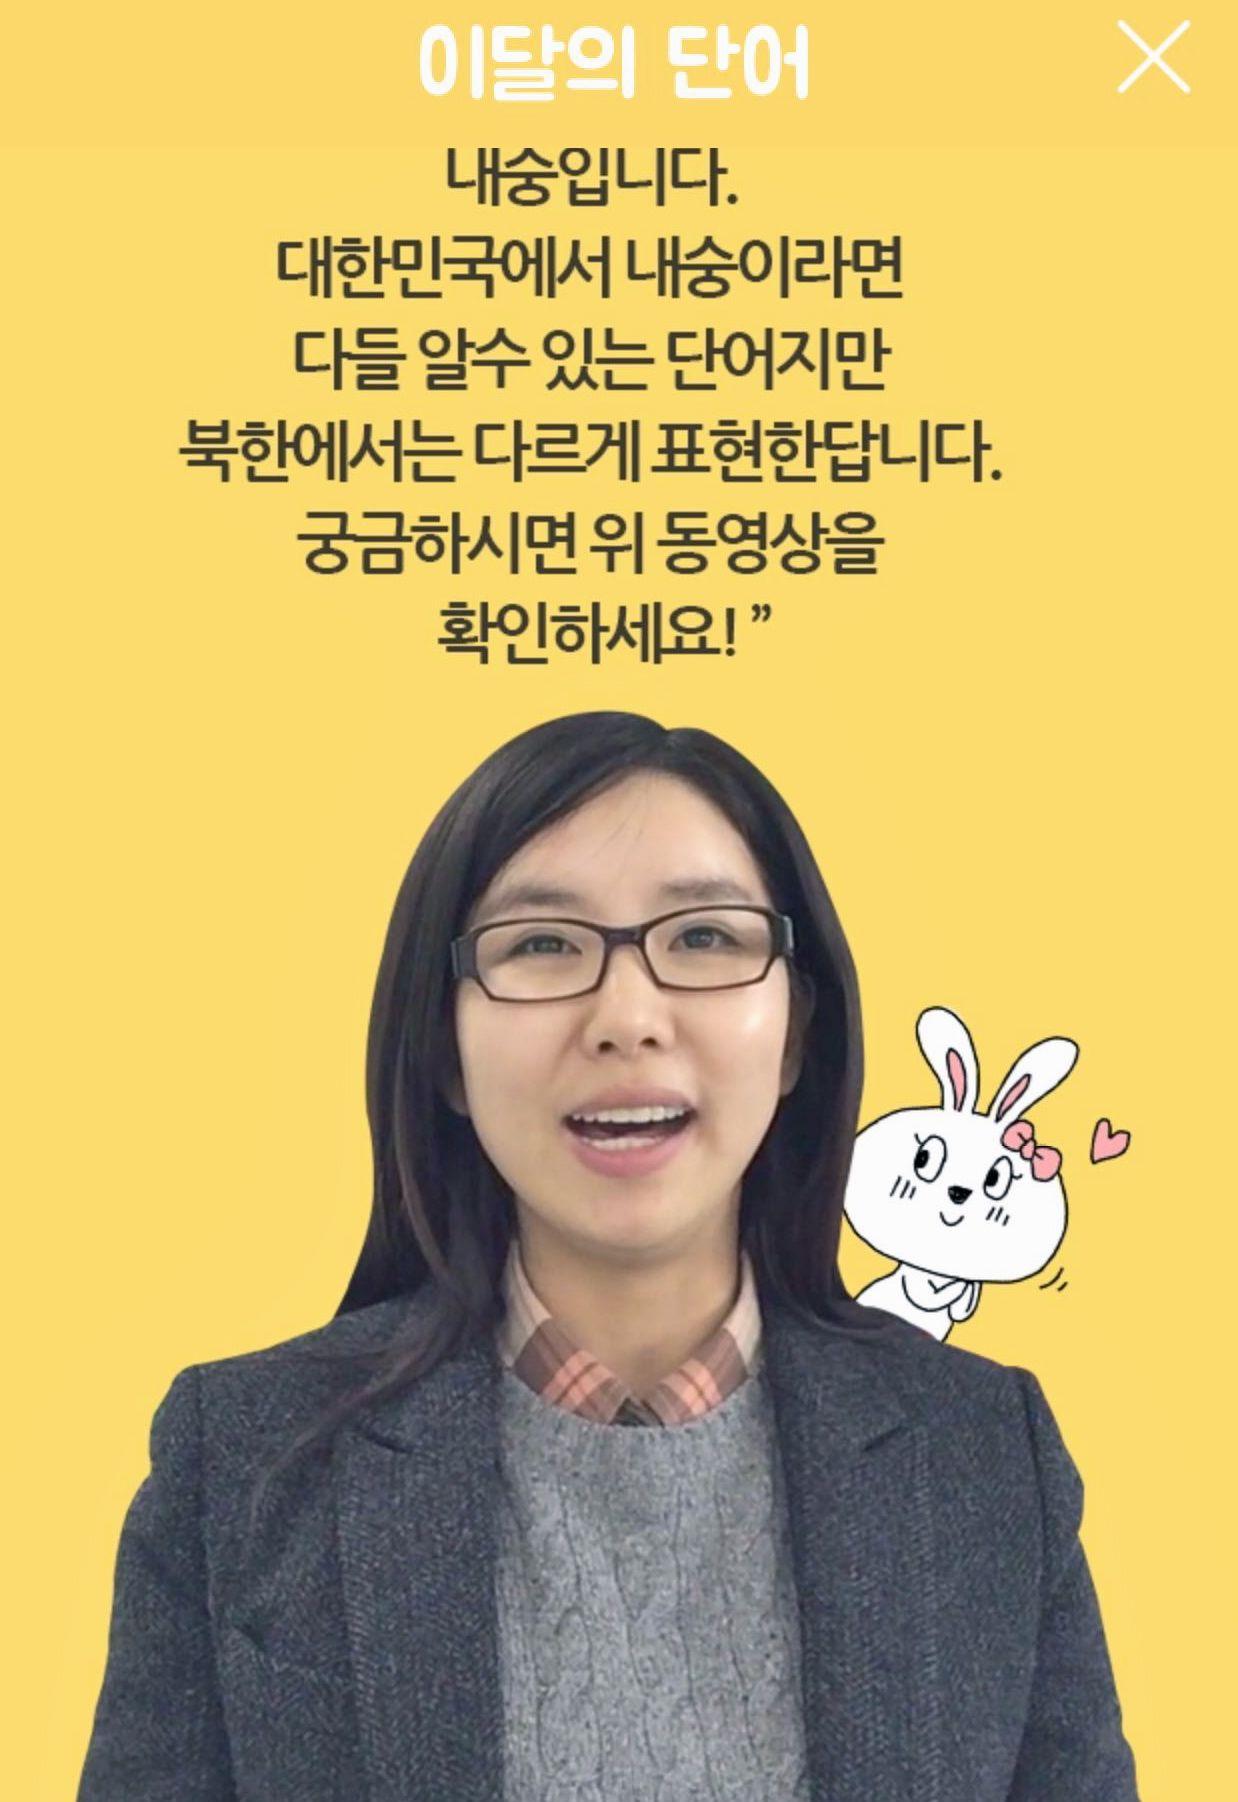 The Univoca app includes a video explaining South Korean dating terminology.